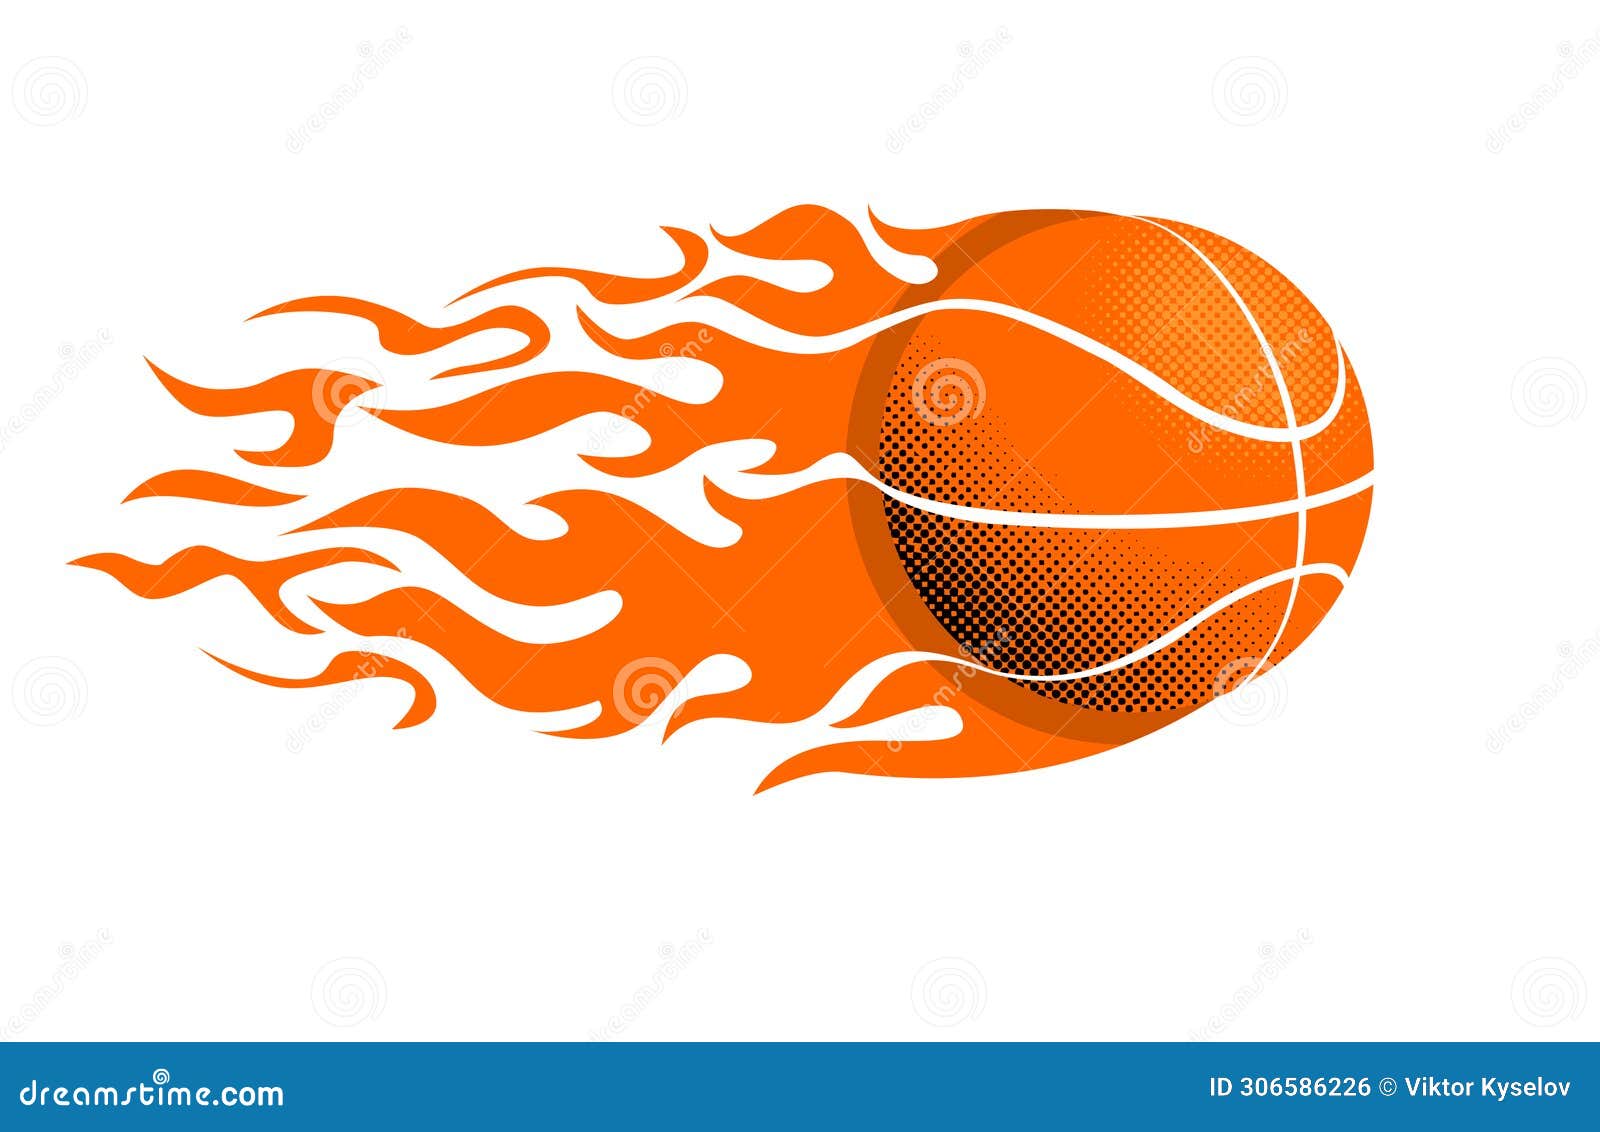 Fire Basketball White Transparent, Fire Sports Basketball On Fire